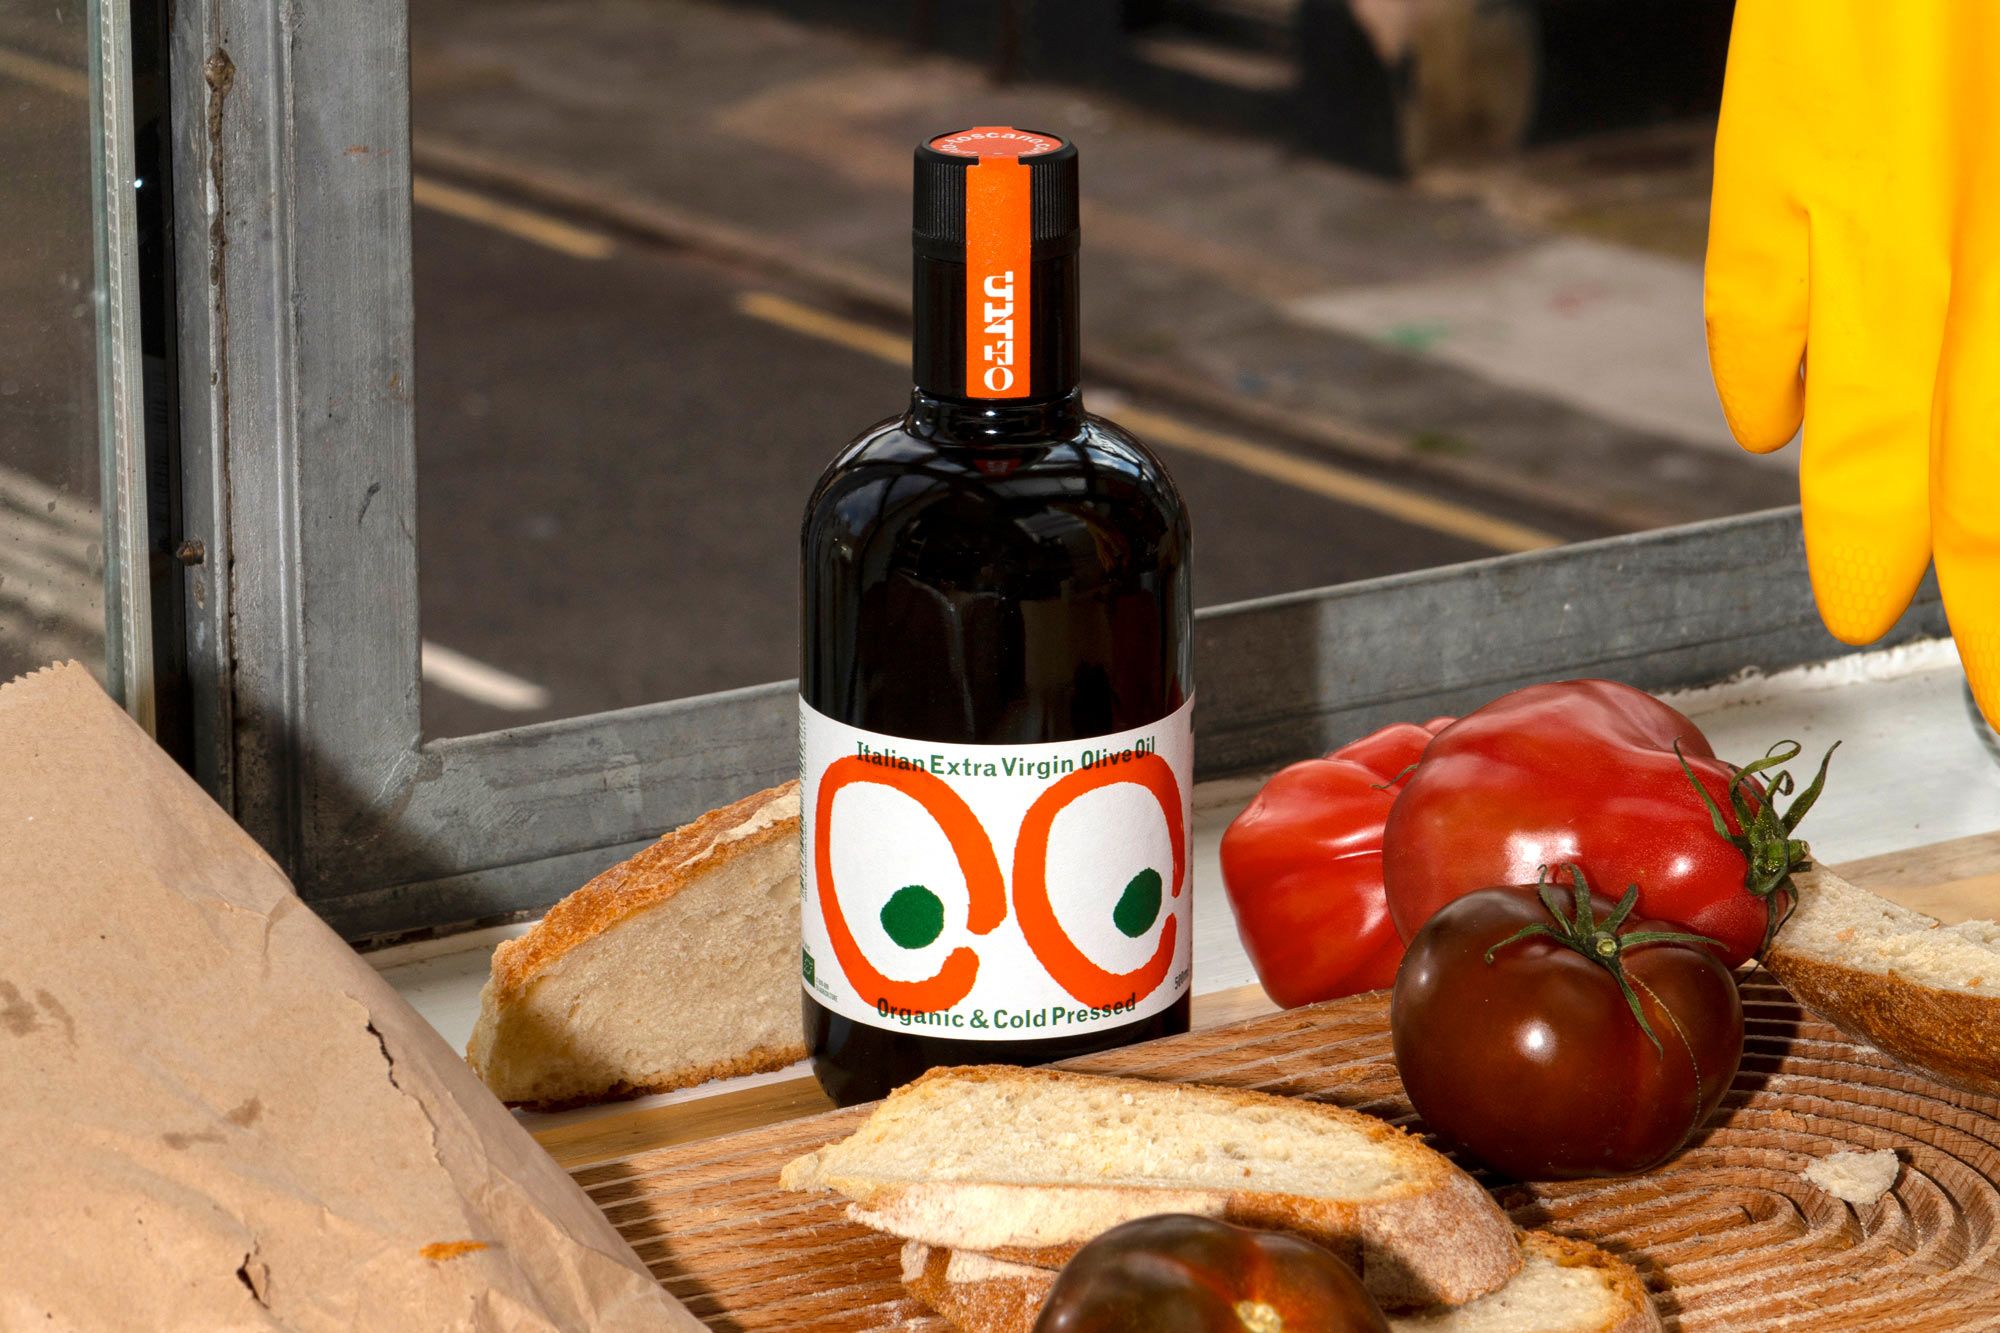 Packaging design for Italian Extra Virgin Olive Oil brand Unto designed by Studio Bergini.